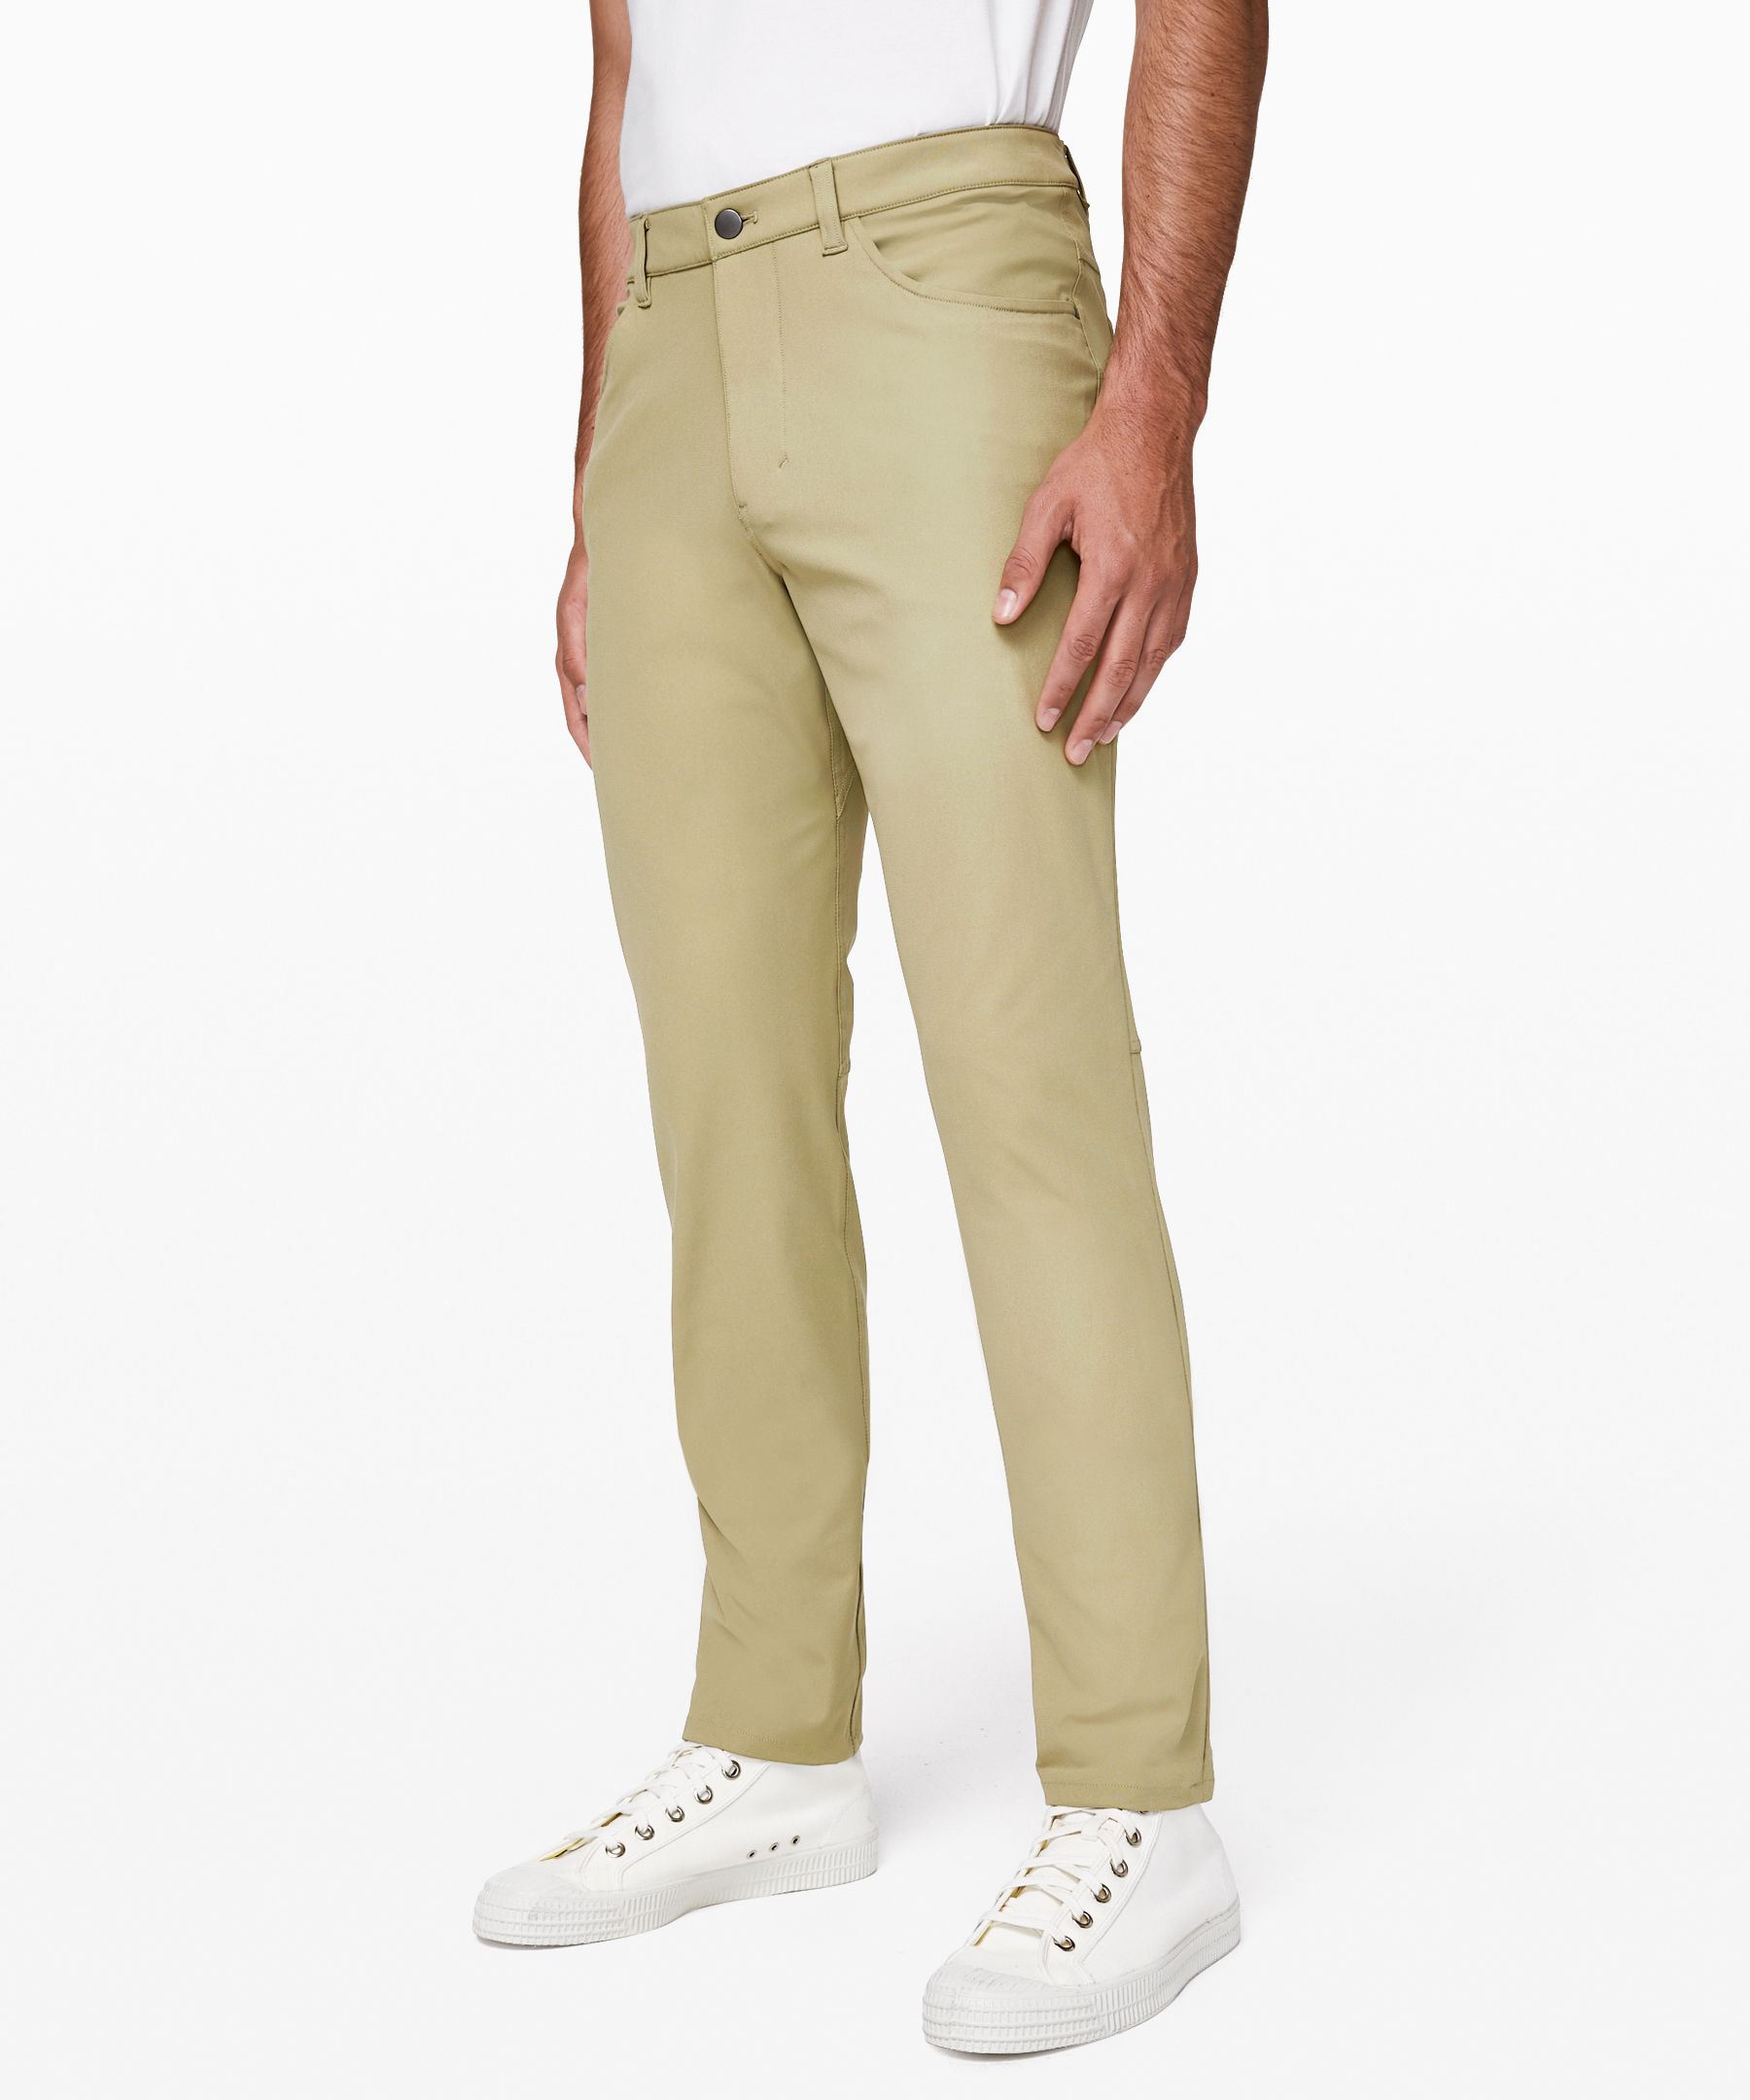 lululemon classic pants